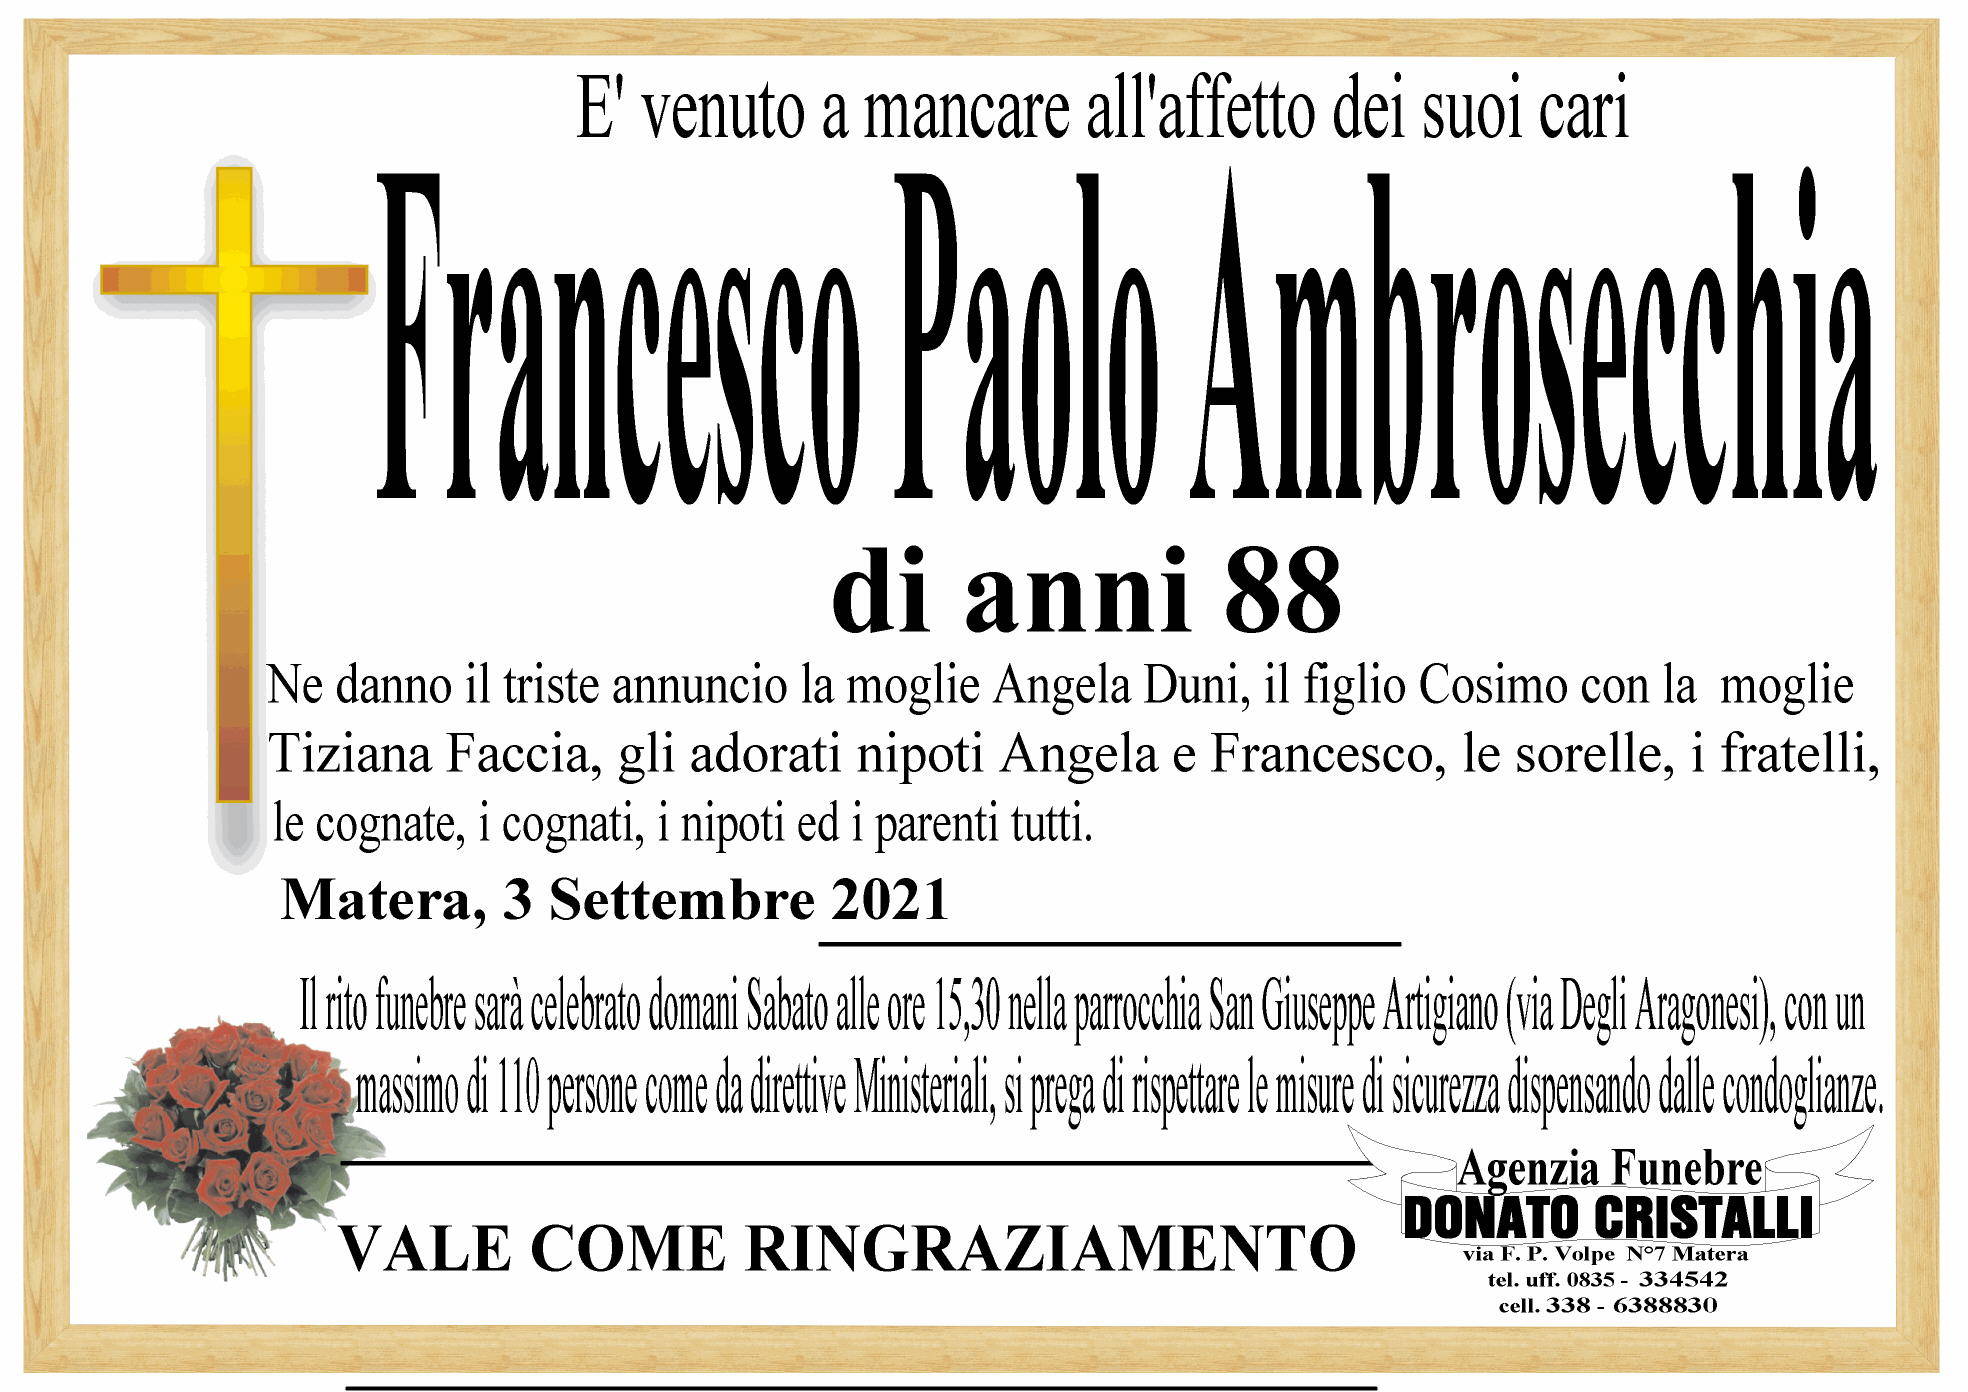 Francesco Paolo Ambrosecchia